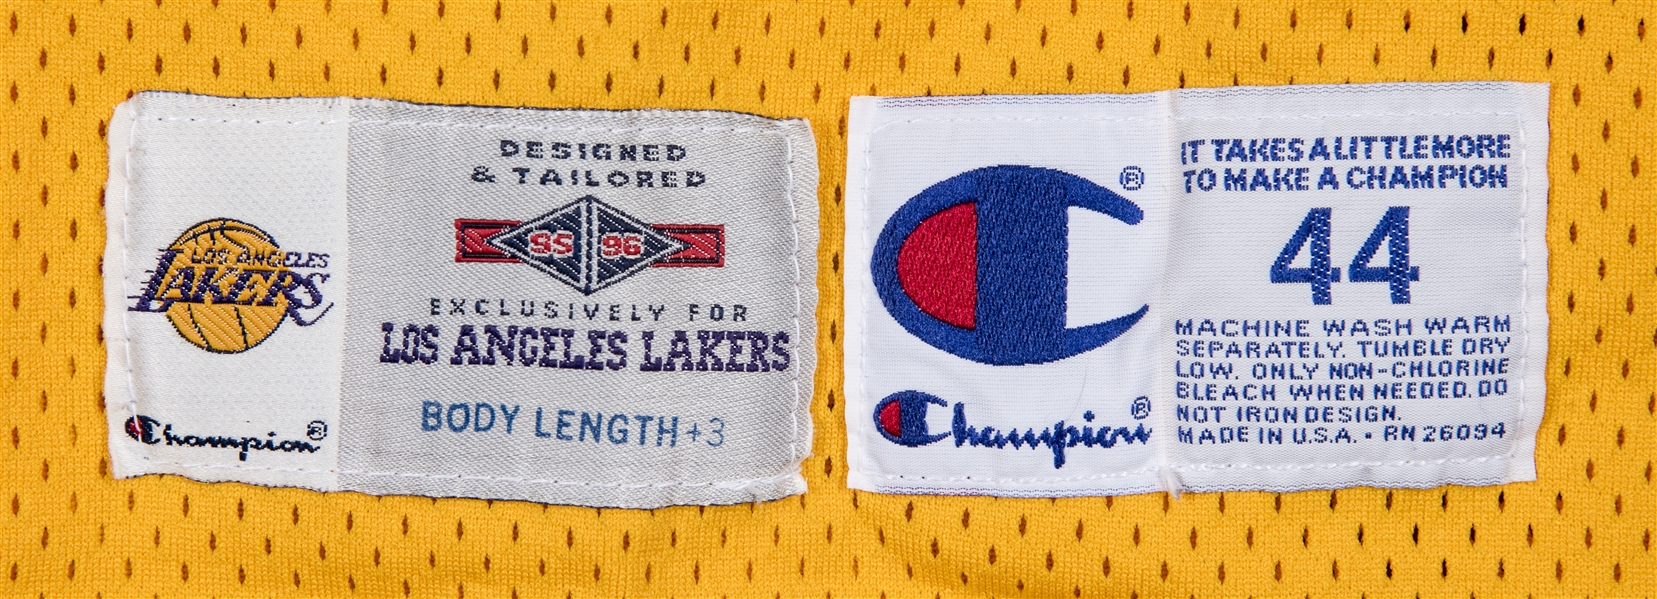 Champion LA Lakers Purple/Gold/White Nick Van Exel Jersey – Fly Vintage 87